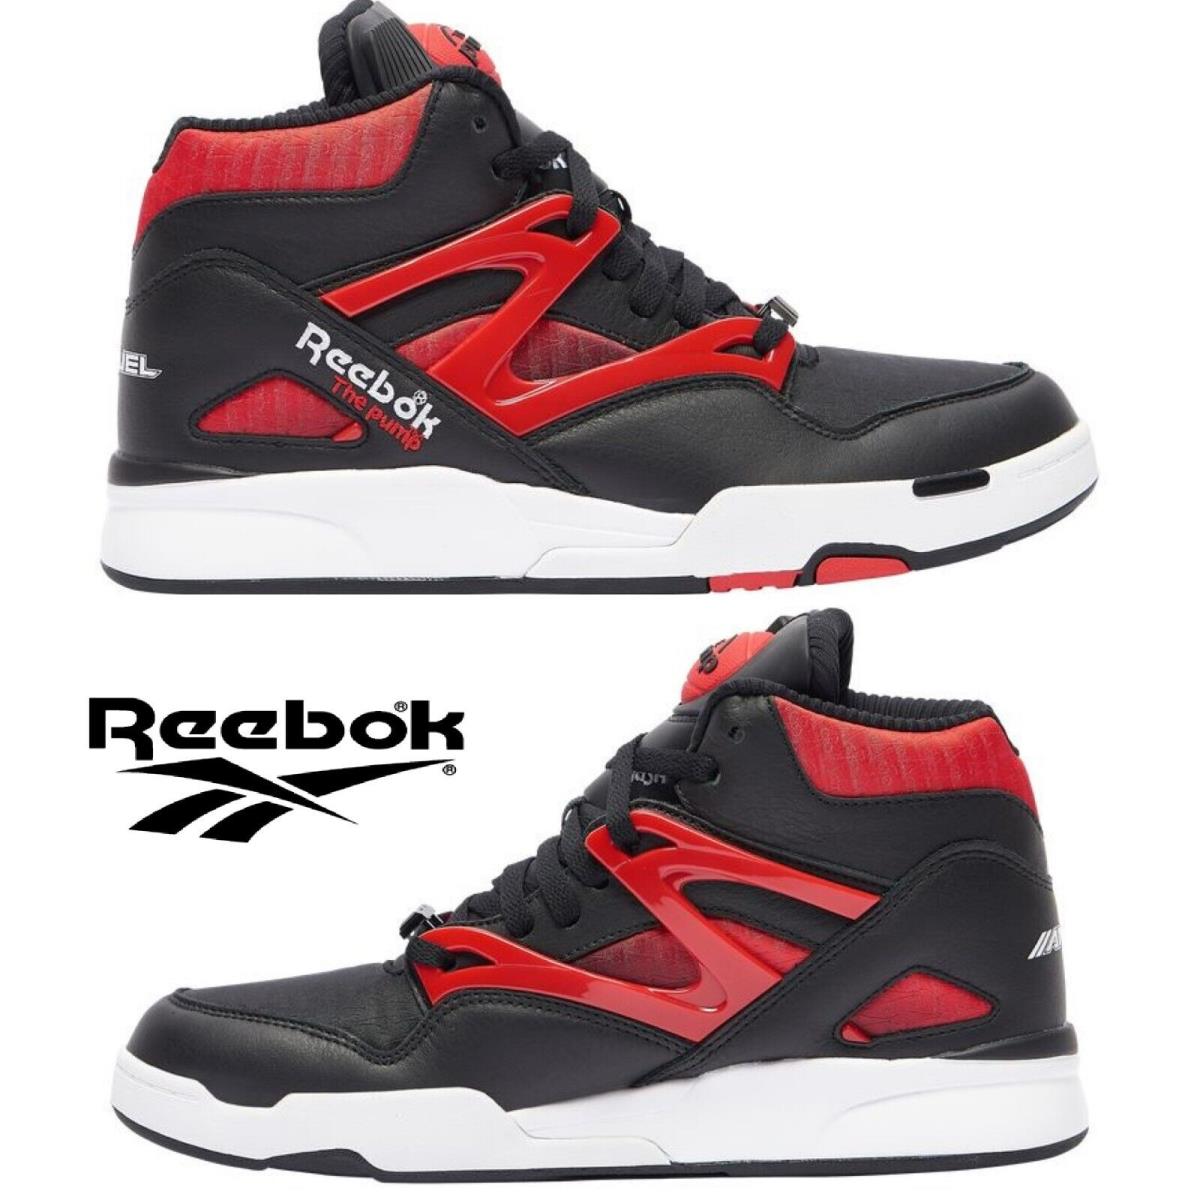 Reebok Pump Omni Zone 2 Basketball Shoes Men`s Sneakers Running Casual Sport